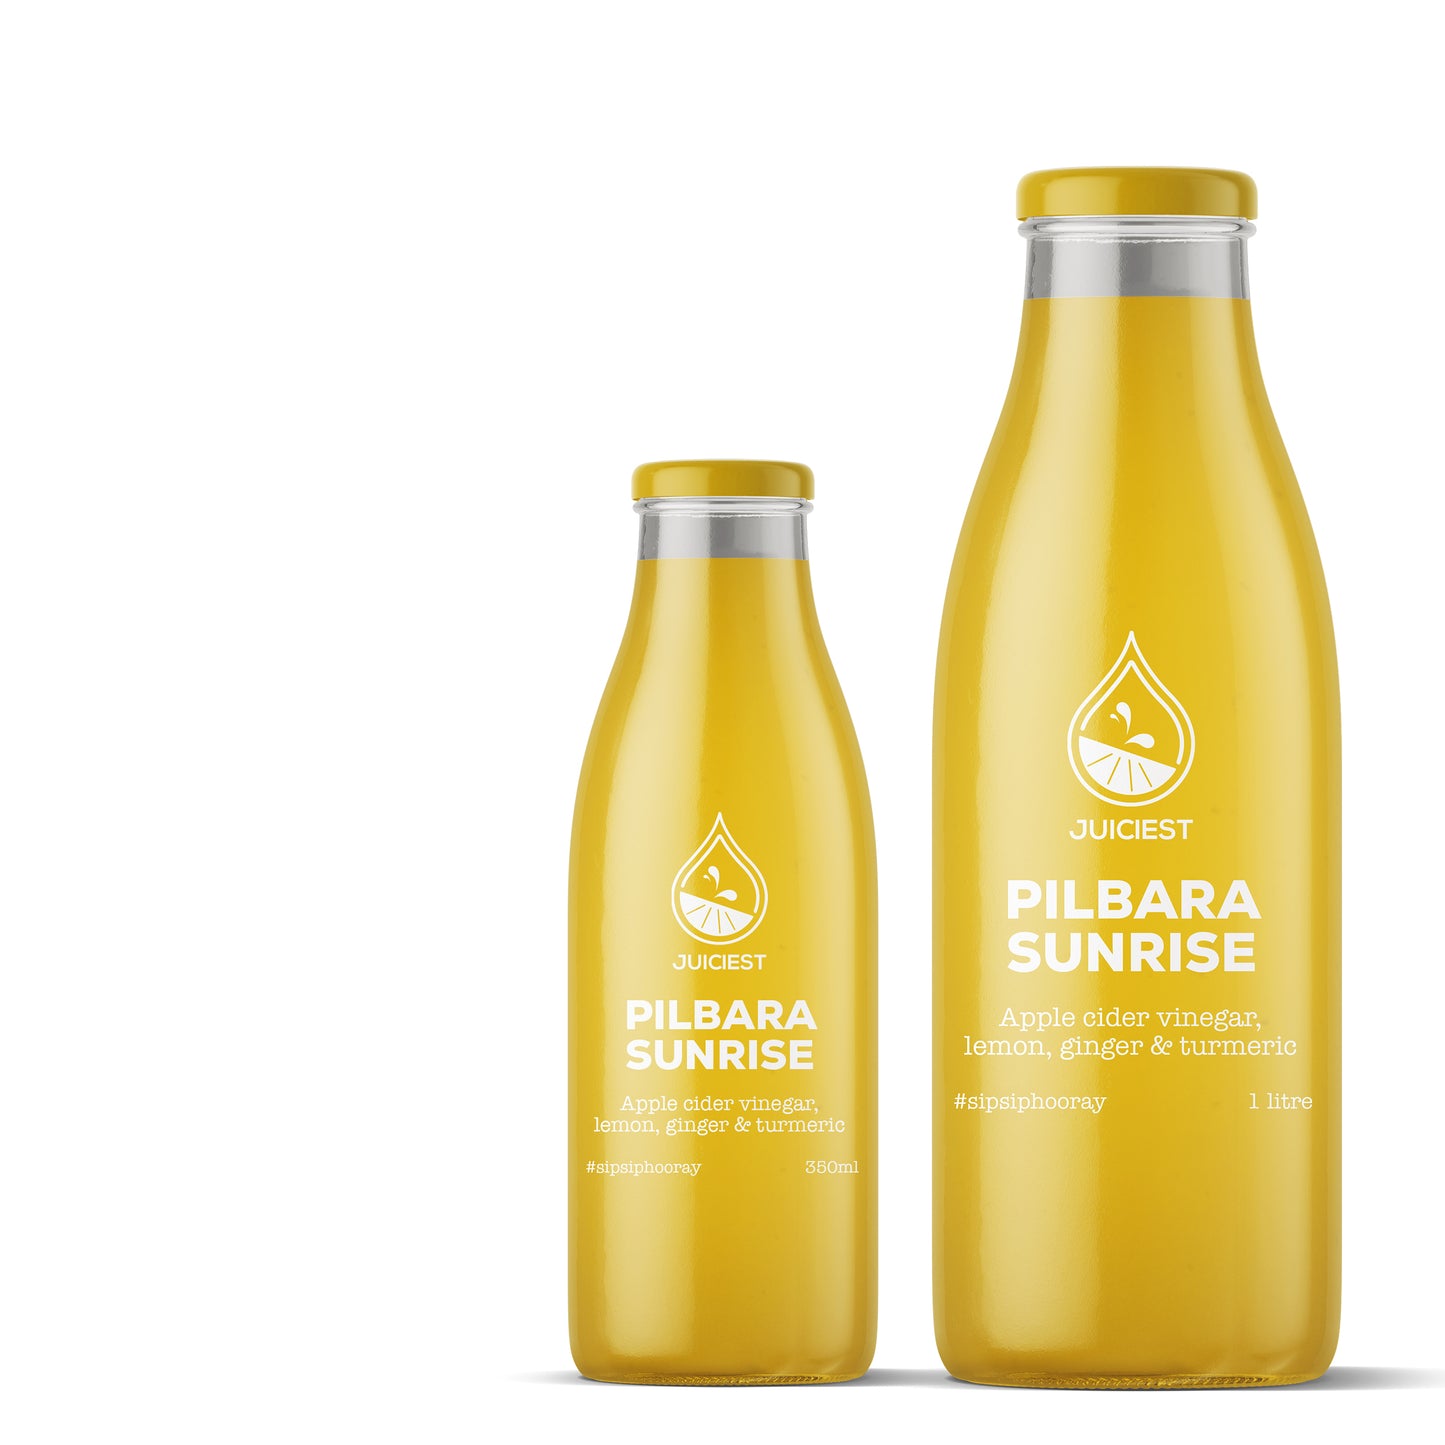 Juiciest Pilbara Sunrise 350ml and 1L bottles